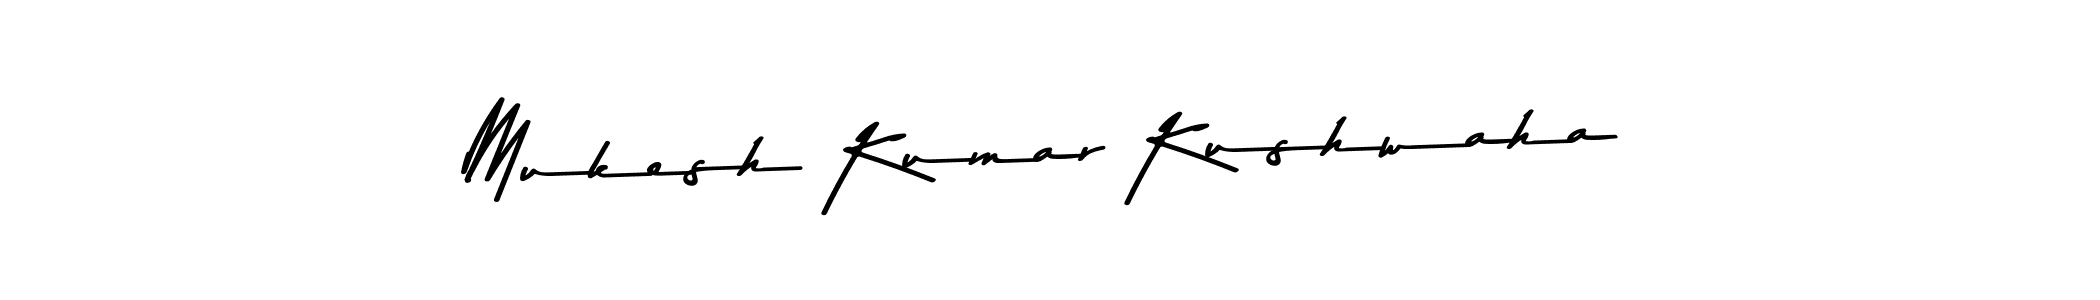 How to Draw Mukesh Kumar Kushwaha signature style? Asem Kandis PERSONAL USE is a latest design signature styles for name Mukesh Kumar Kushwaha. Mukesh Kumar Kushwaha signature style 9 images and pictures png